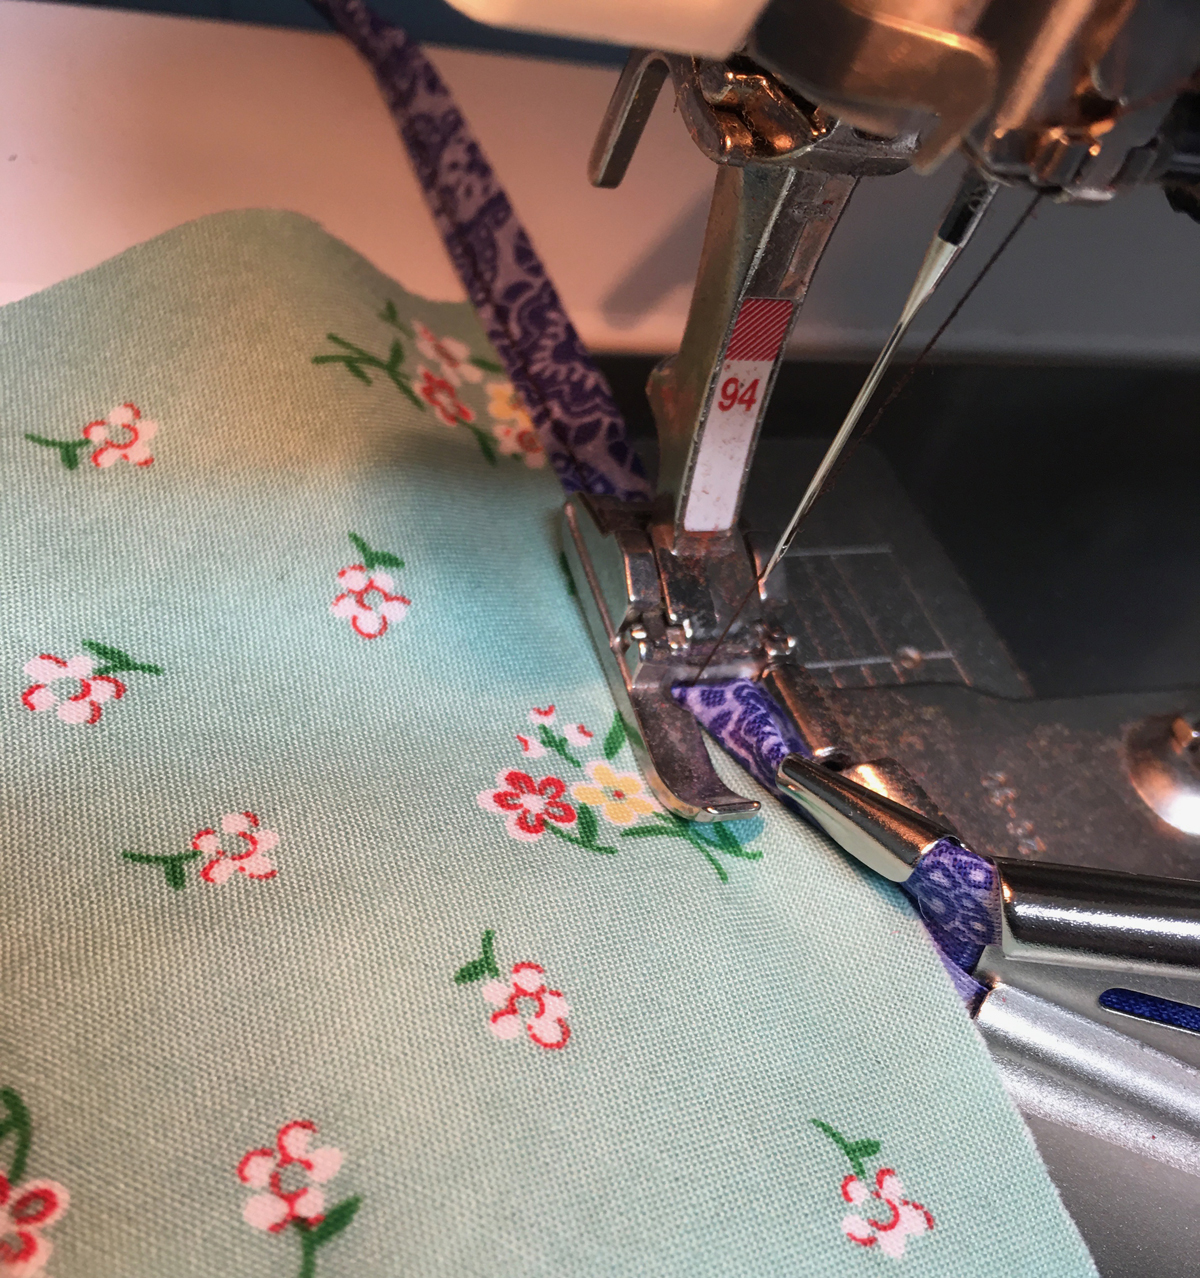 Sewing machine binding foot at work binding a face mask